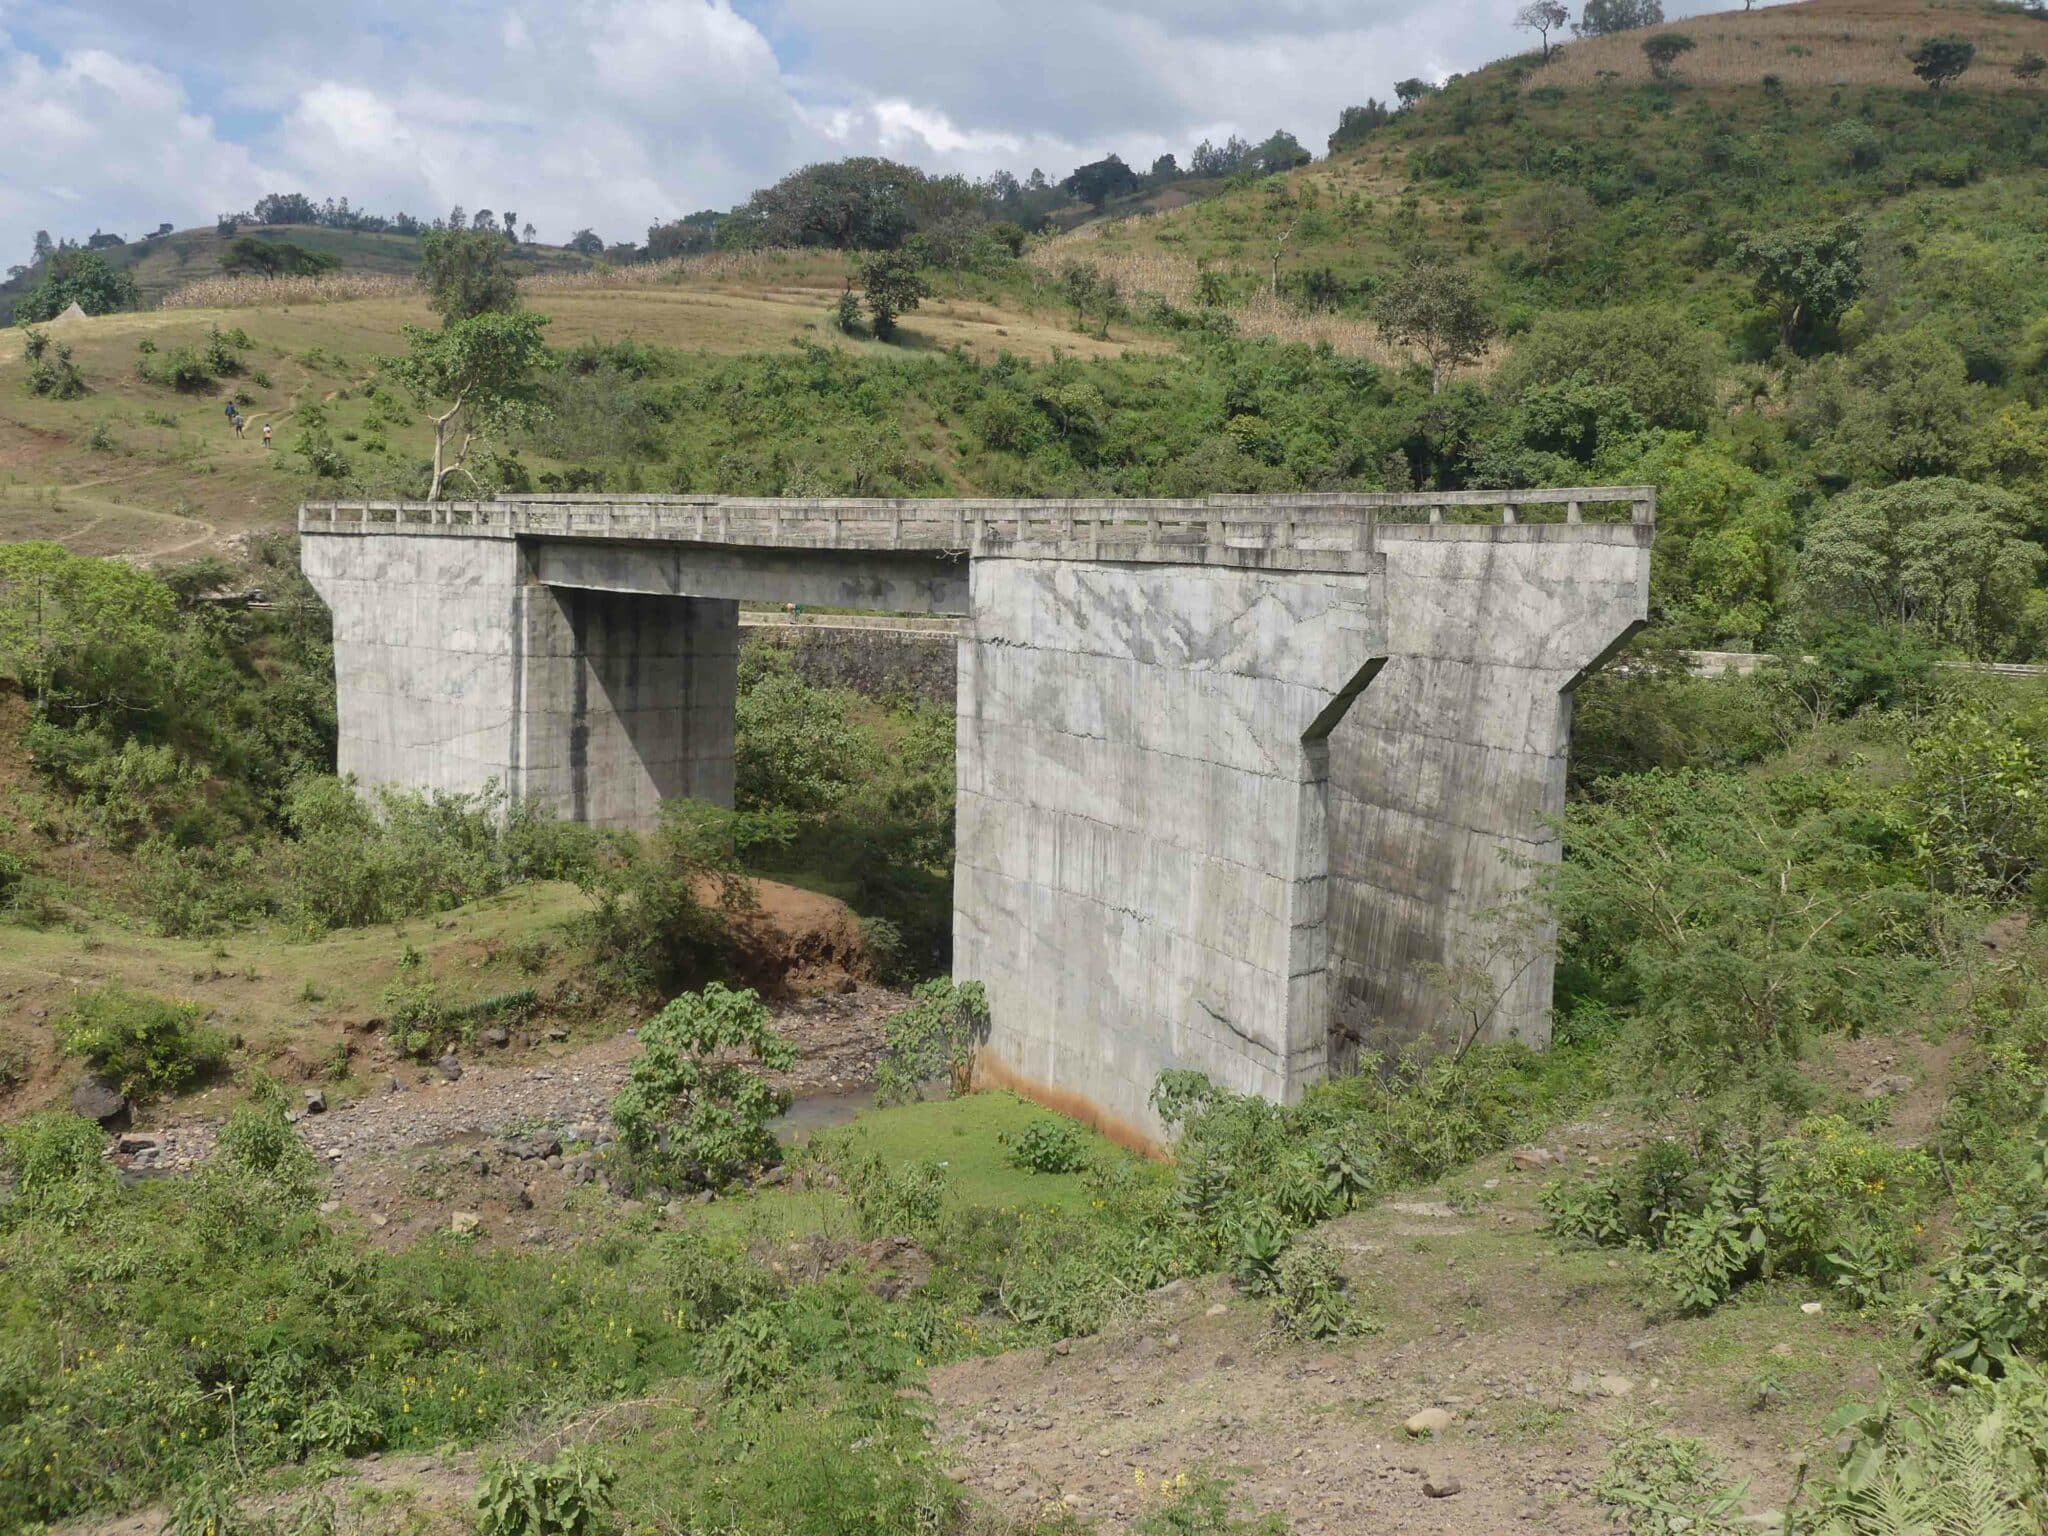 Abandoned Infrastructure Undertaking in Ethiopia